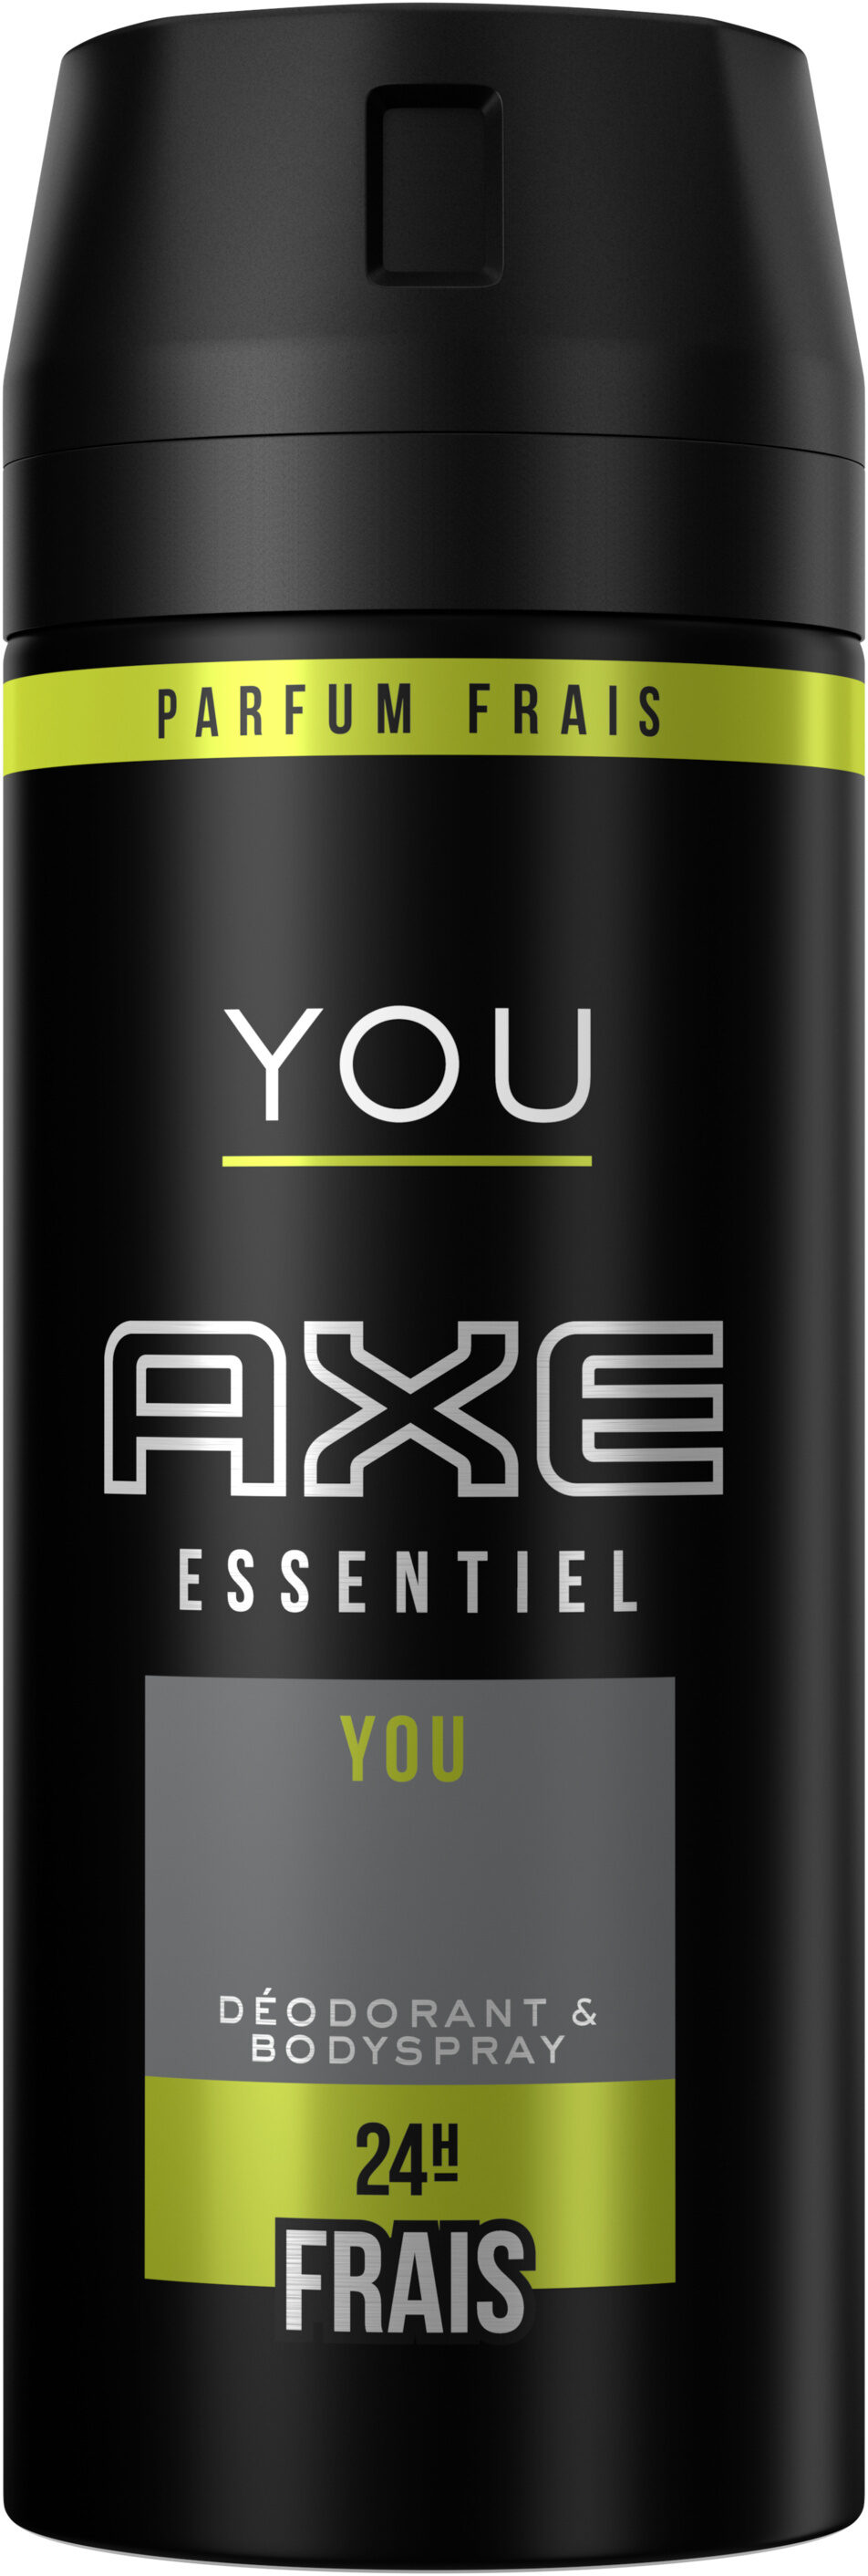 AXE Déodorant Homme You Essentiel Spray 150ml - Product - fr